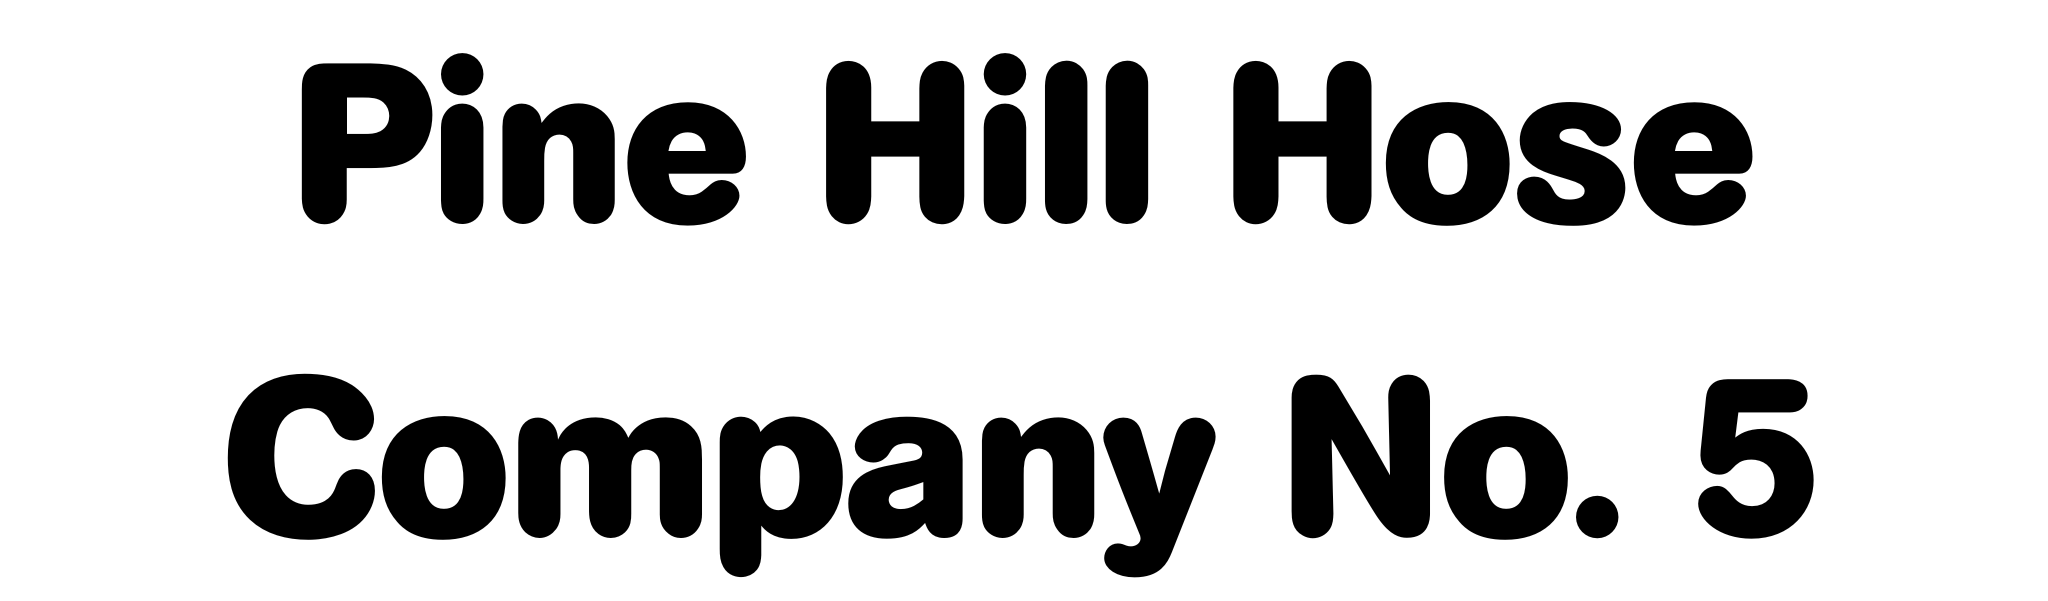 Pine Hill Hose Company No. 5 (Silver) 